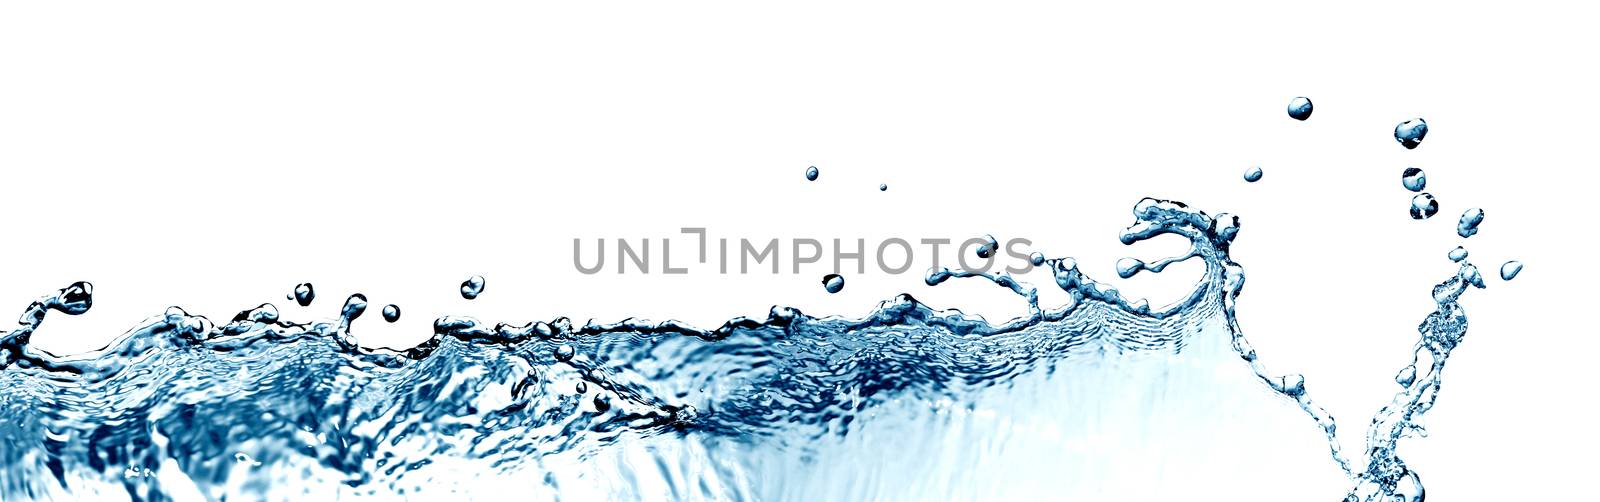 Splashing Water by kvkirillov